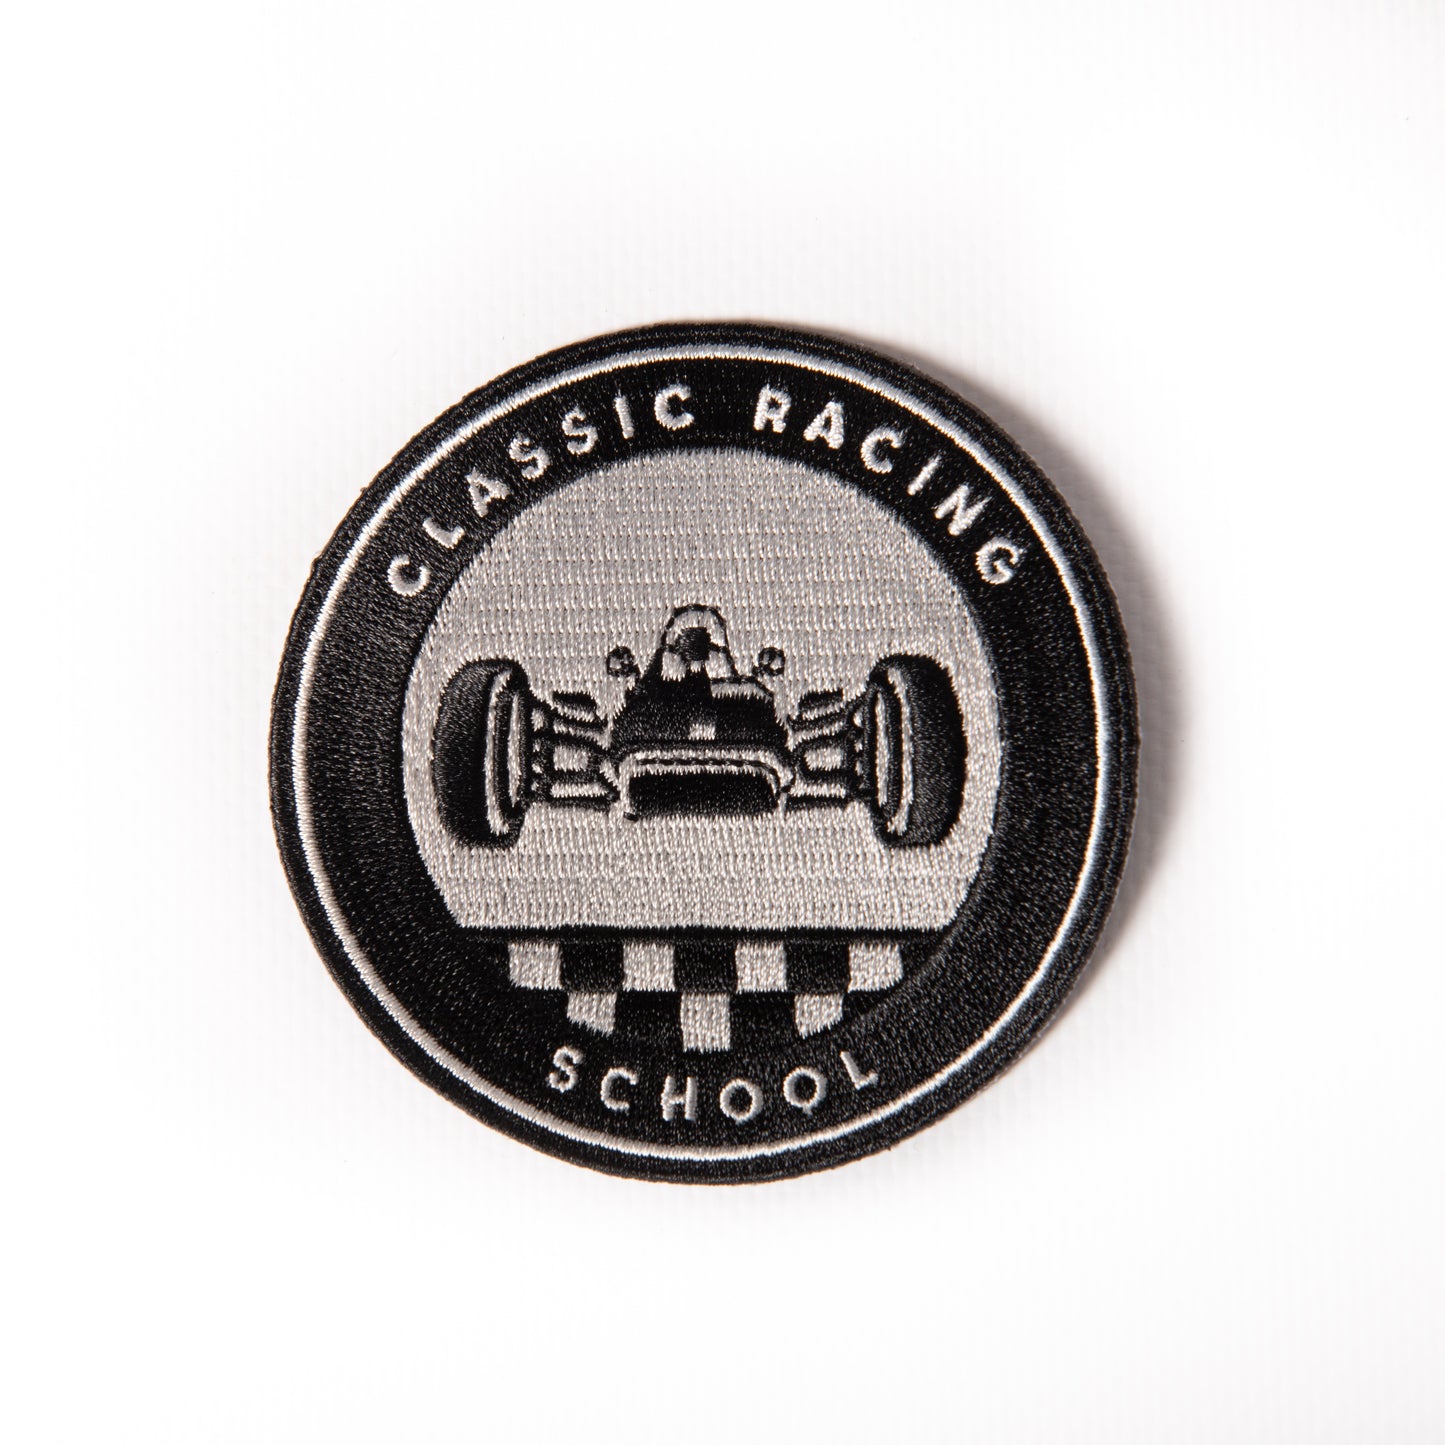 CLASSIC RACING SCHOOL - ECUSSON